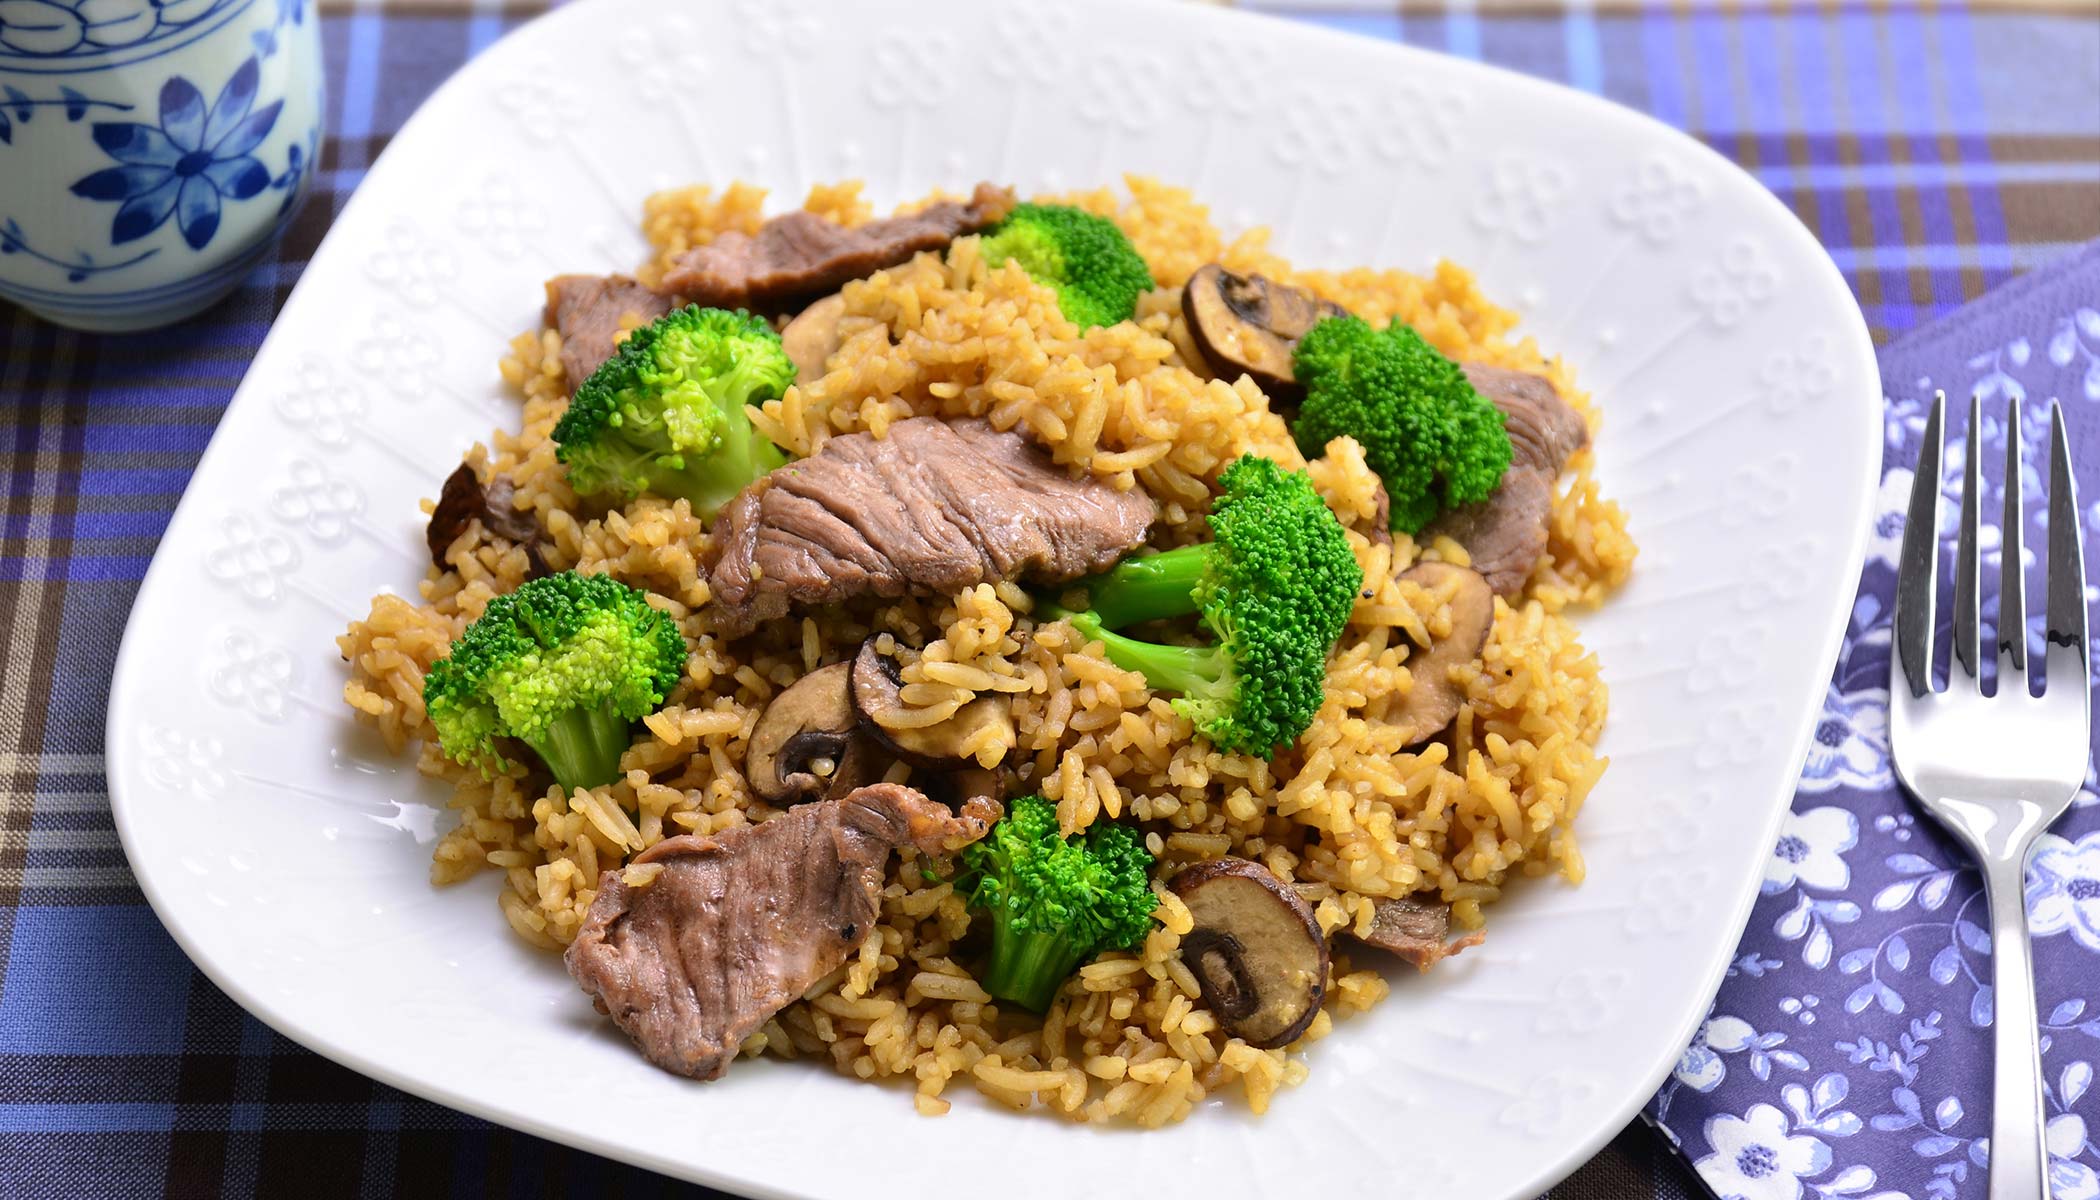 Zojirushi Recipe – Portabella Mushroom Rice with Beef and Broccoli